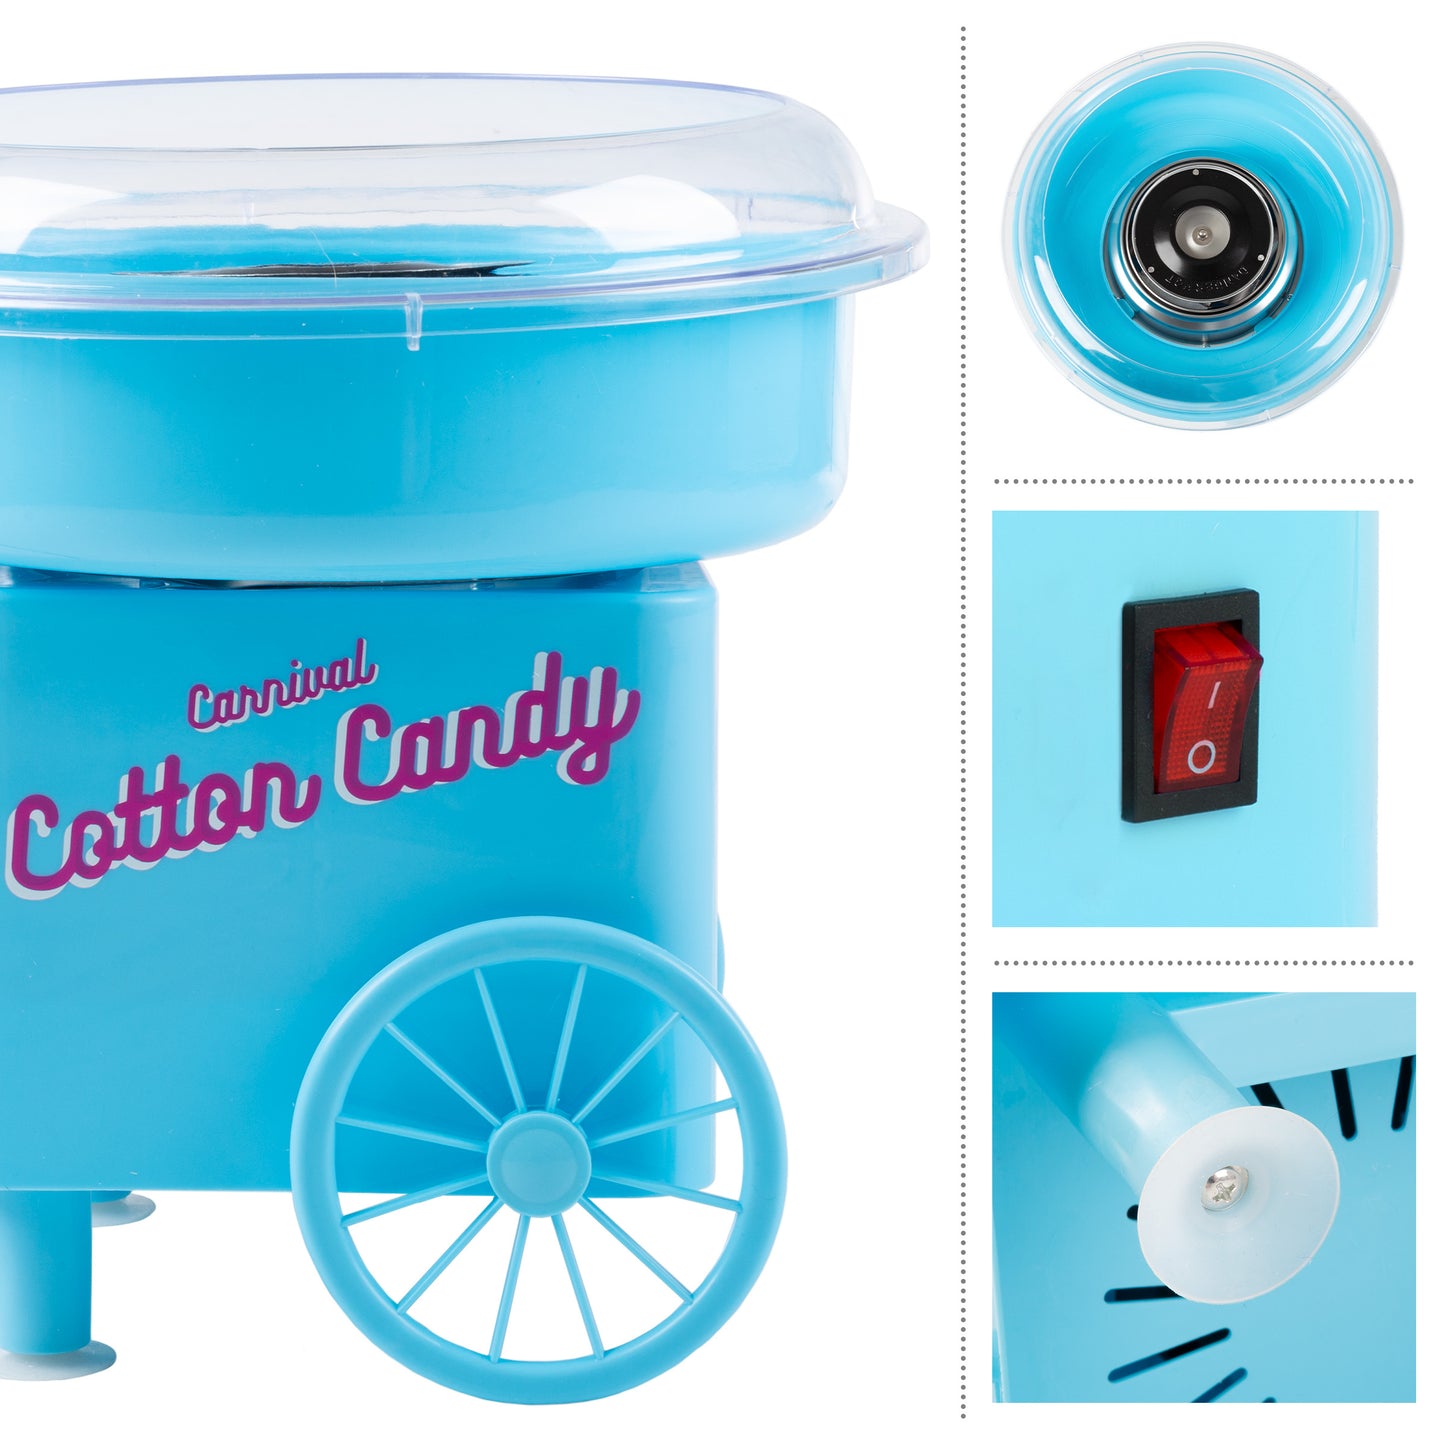 Countertop Cotton Candy Machine – Blue